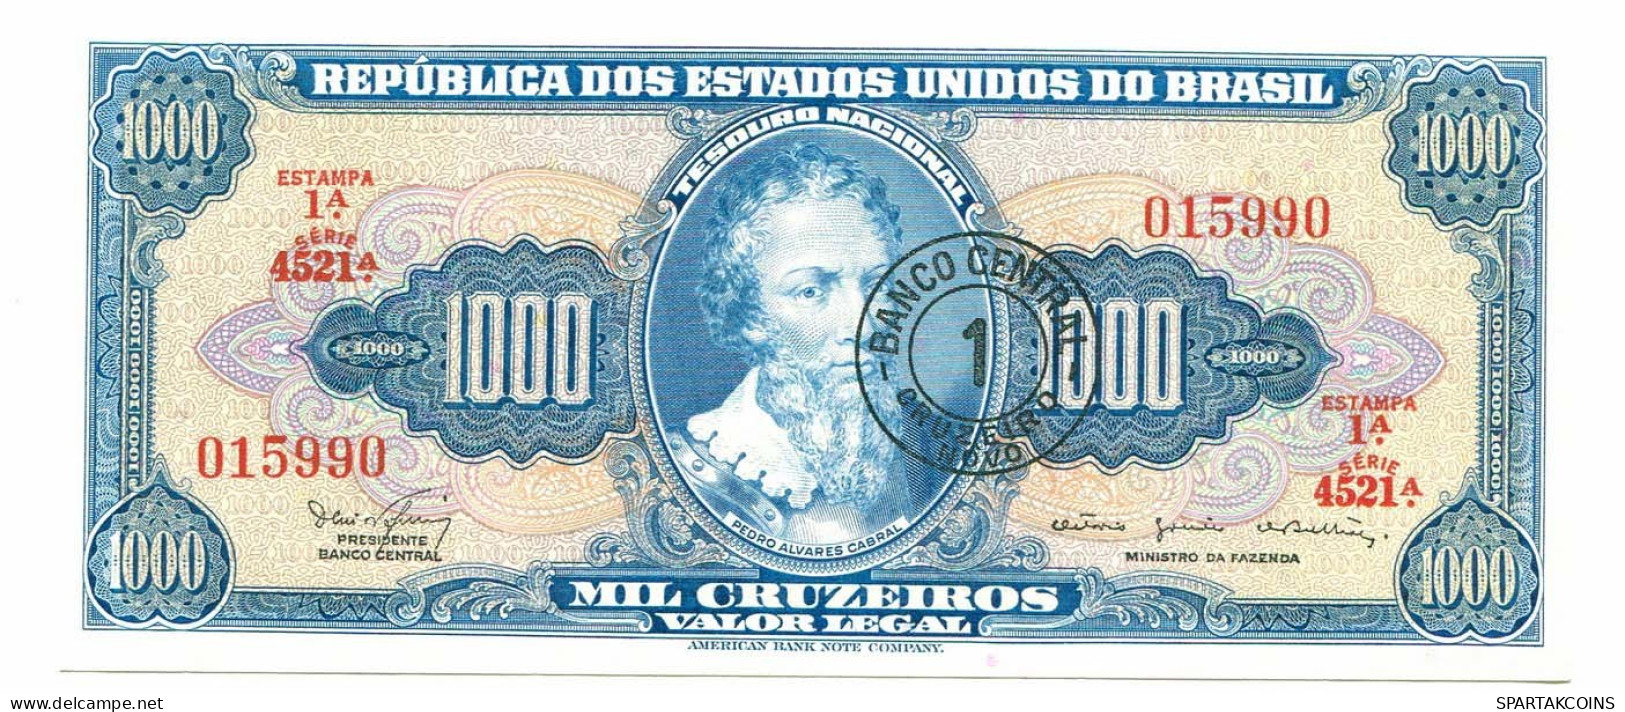 BRASIL 1000 CRUZEIROS 1963 SERIE 4521A UNC Paper Money Banknote #P10869.4 - Lokale Ausgaben